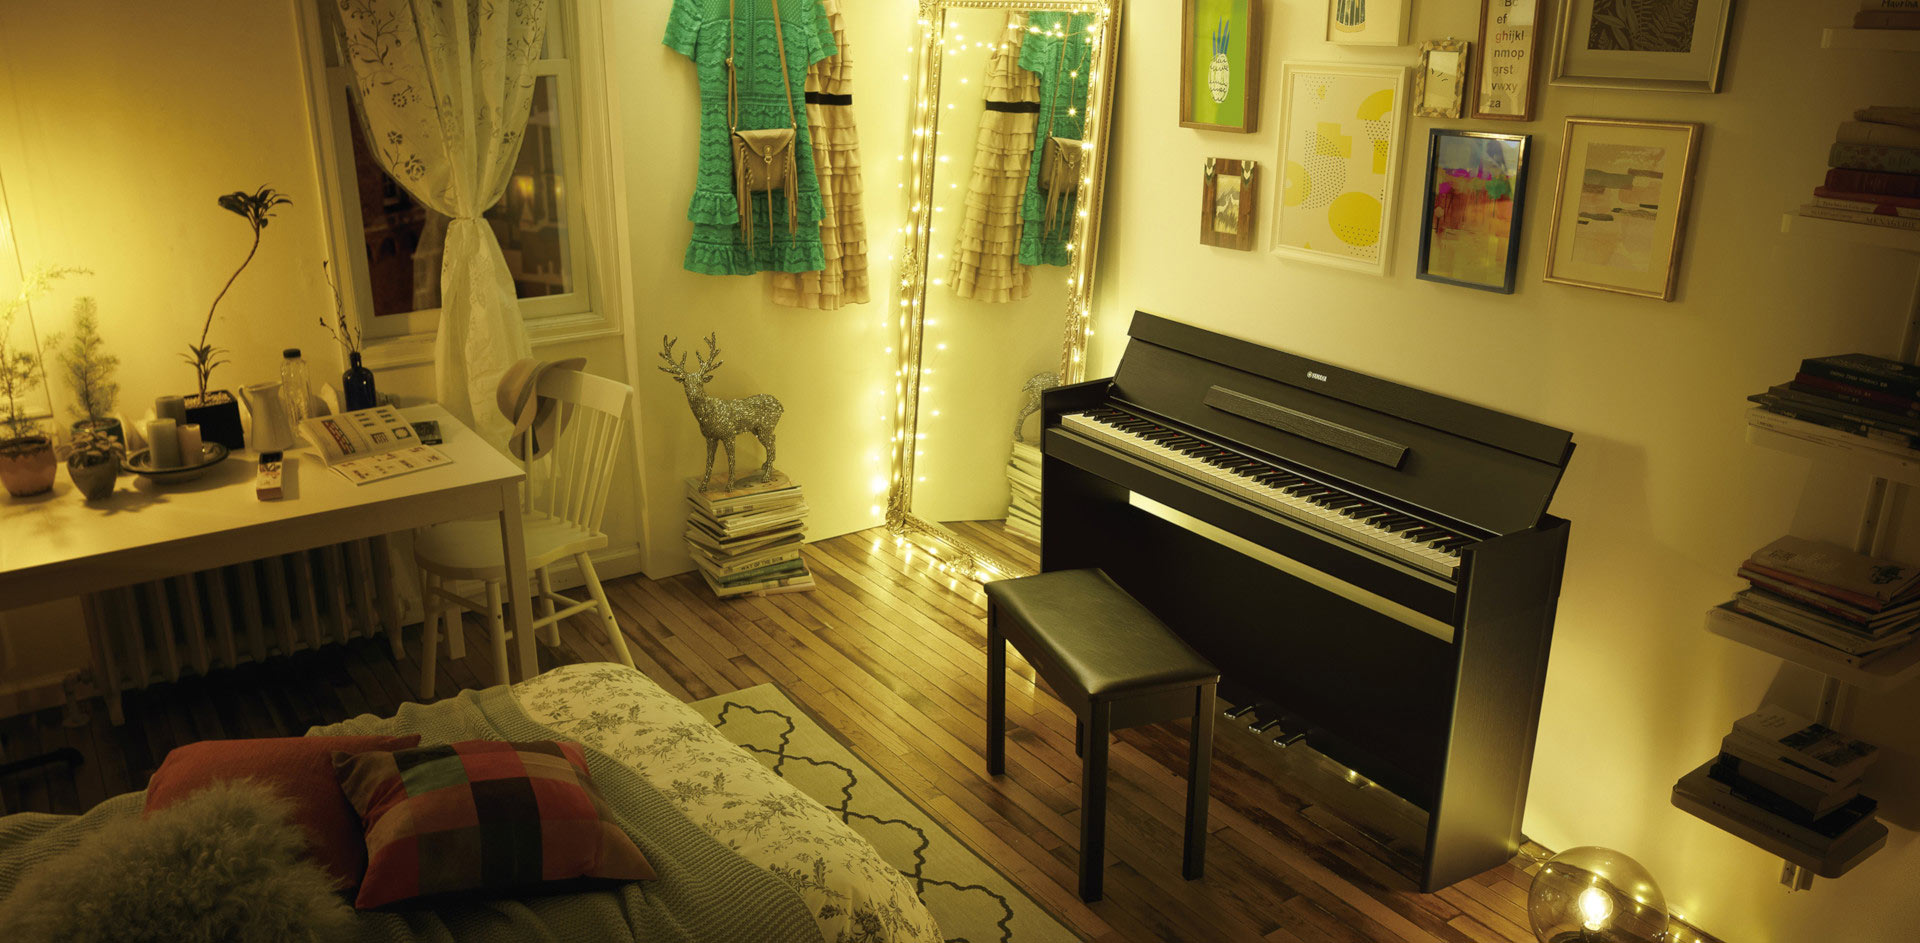 arius piano hero image in a room in a dimlight setting